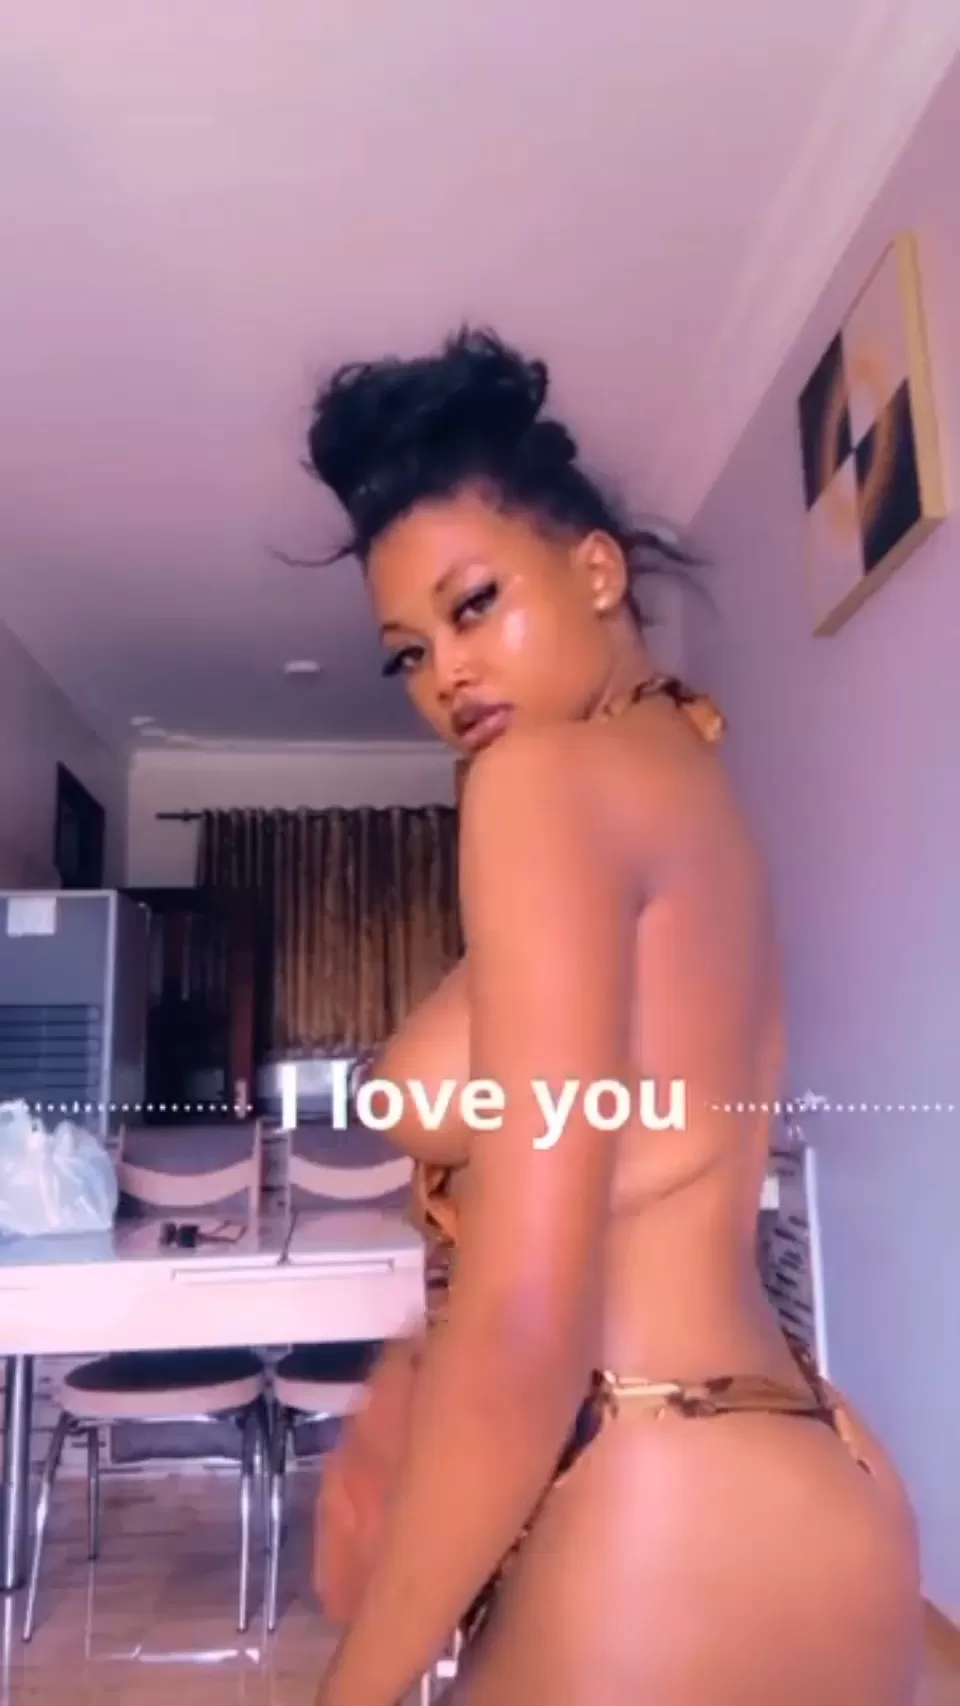 Watch Ugandan Socialite Kim London Nude Video Leaked by David the Hacker Here